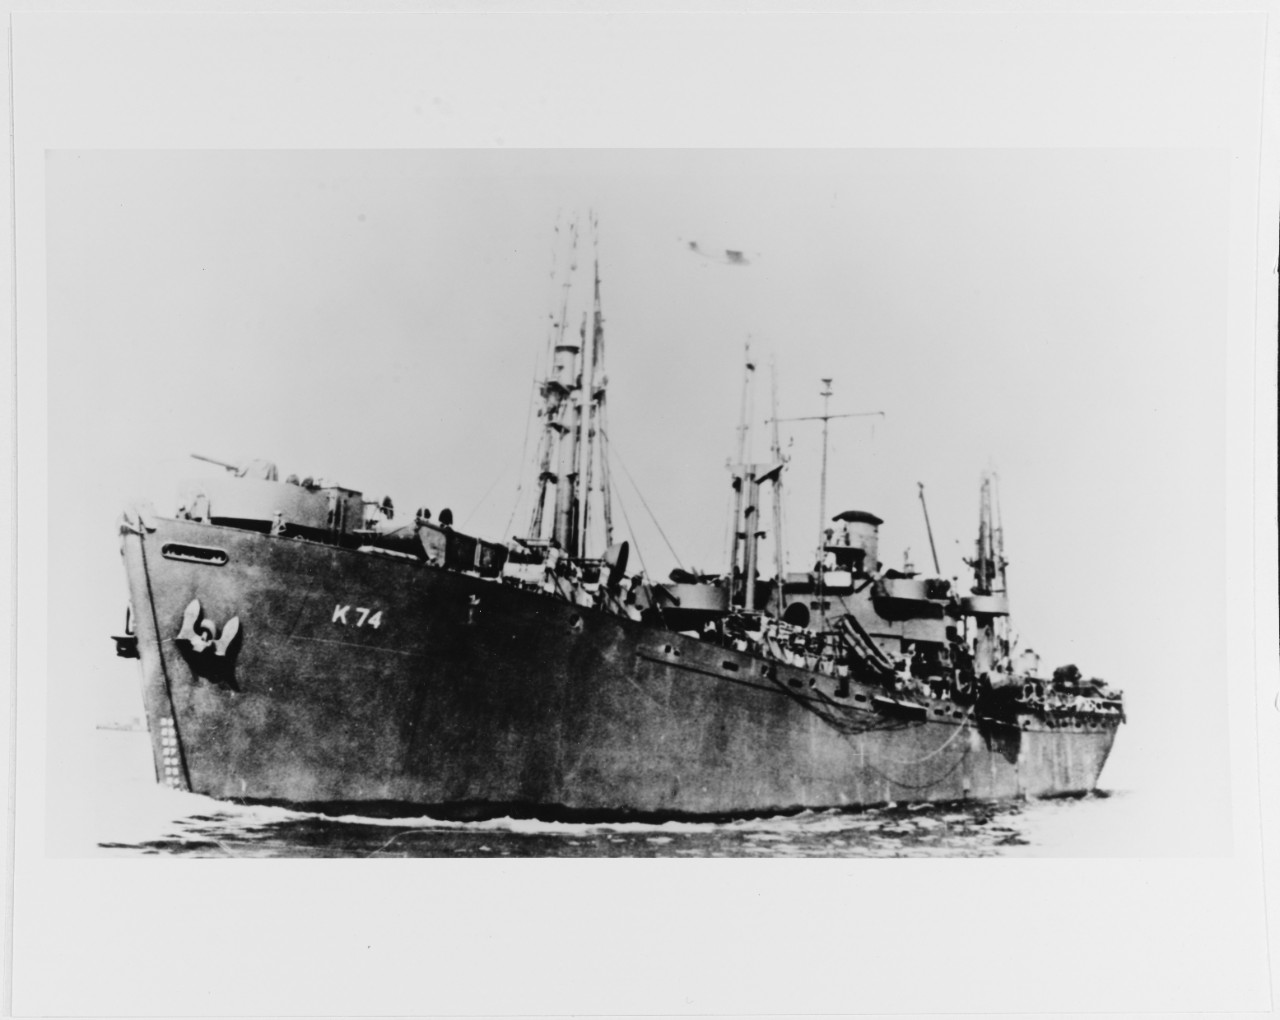 USS CARINA (AK-74)